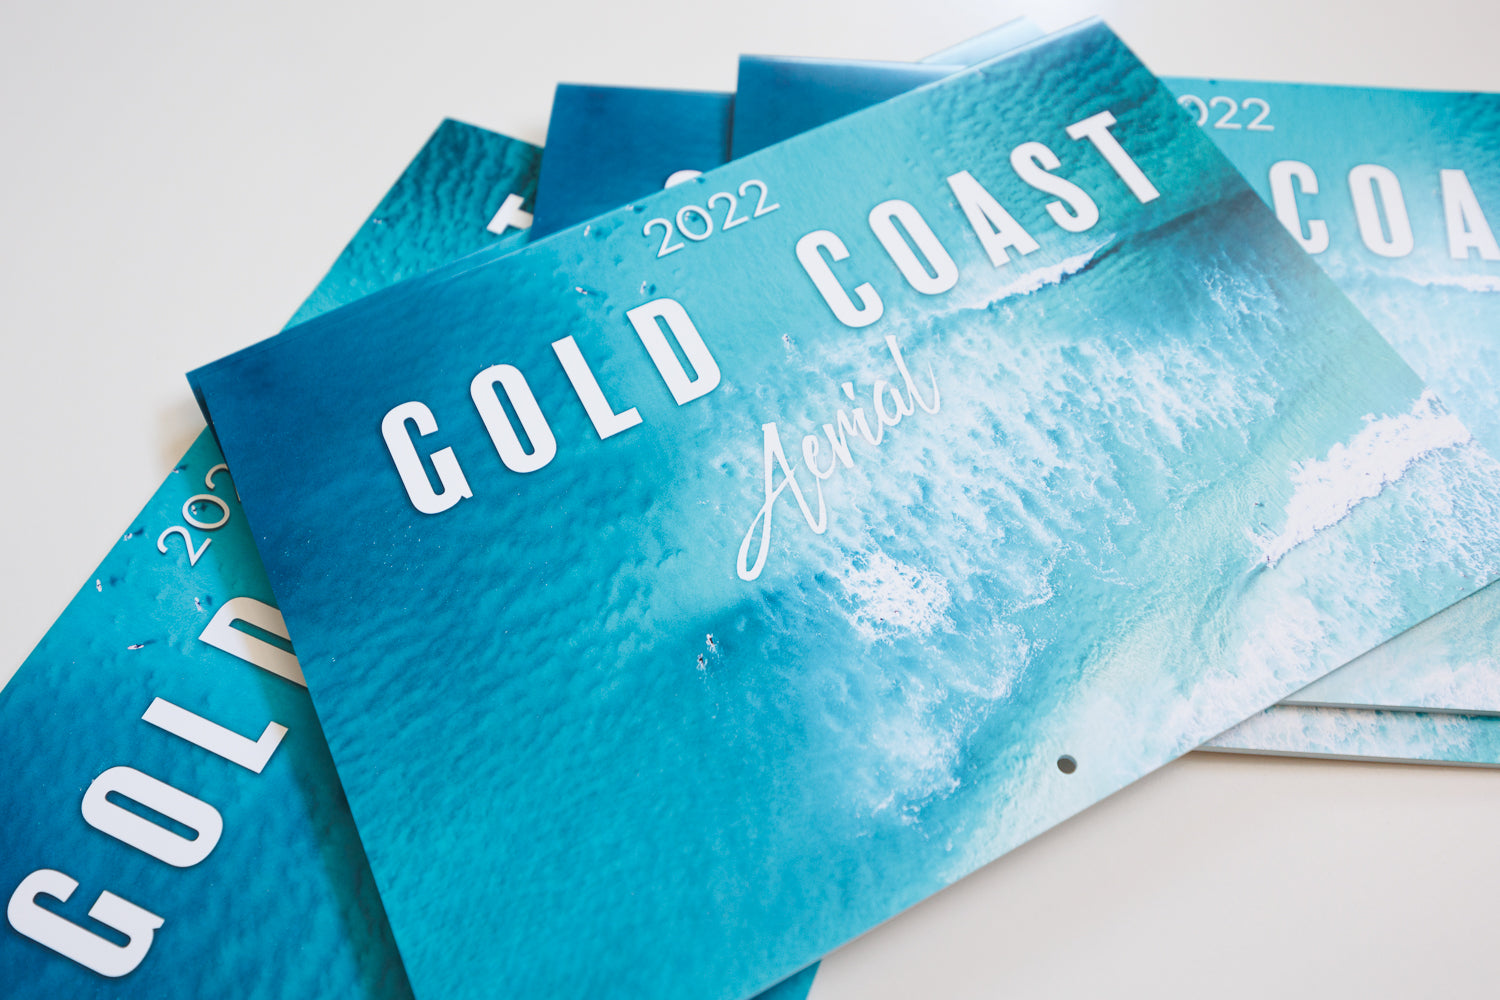 Gold Coast Aerial Calendar 2022 - Australian Dates